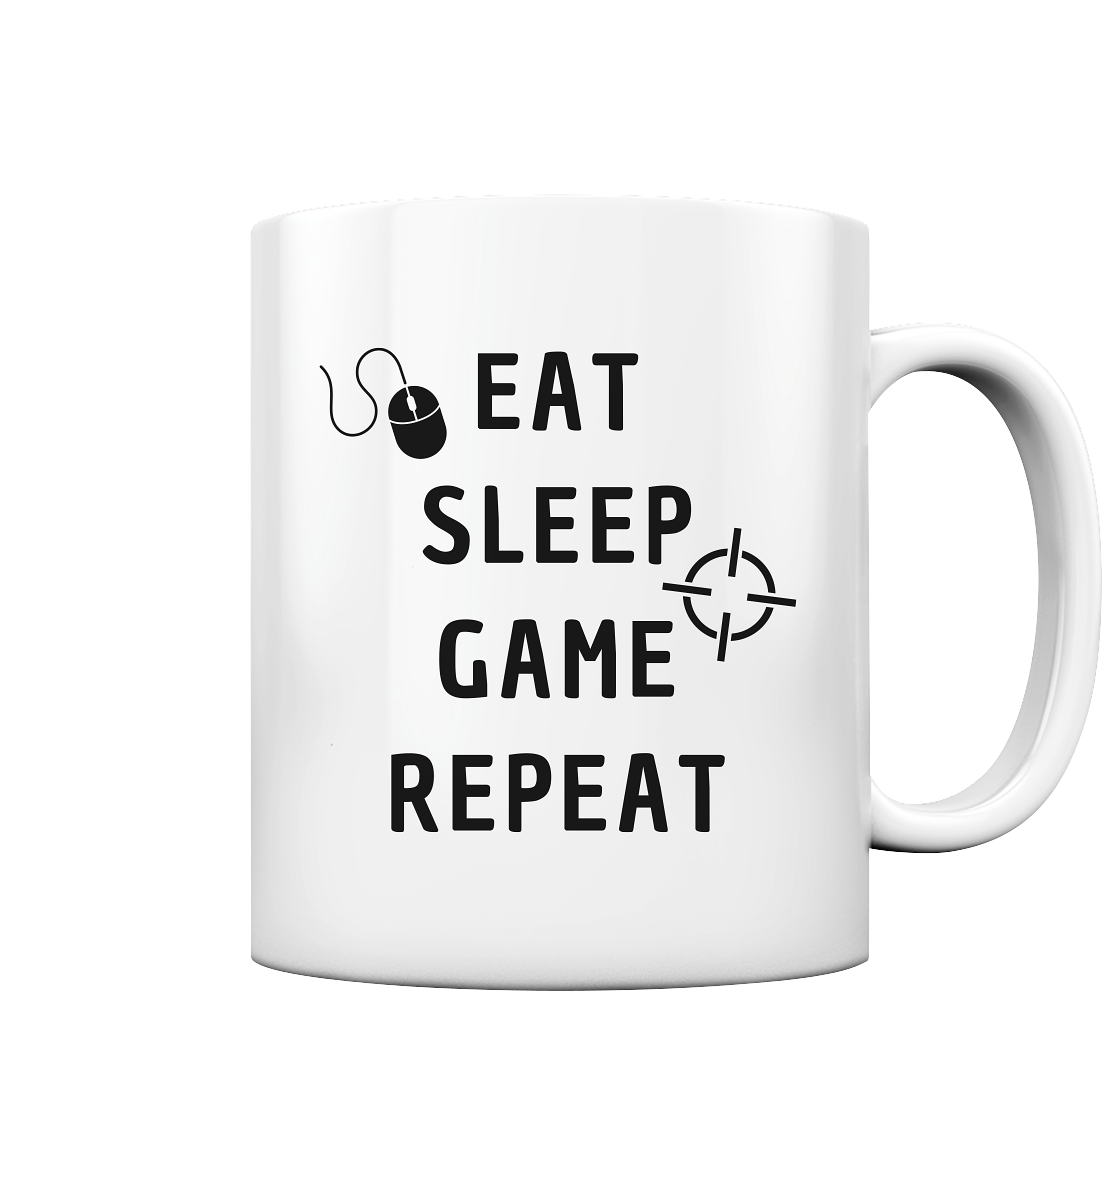 Tasse "Eat Sleep Game Repeat" - Perfekt für Gamer